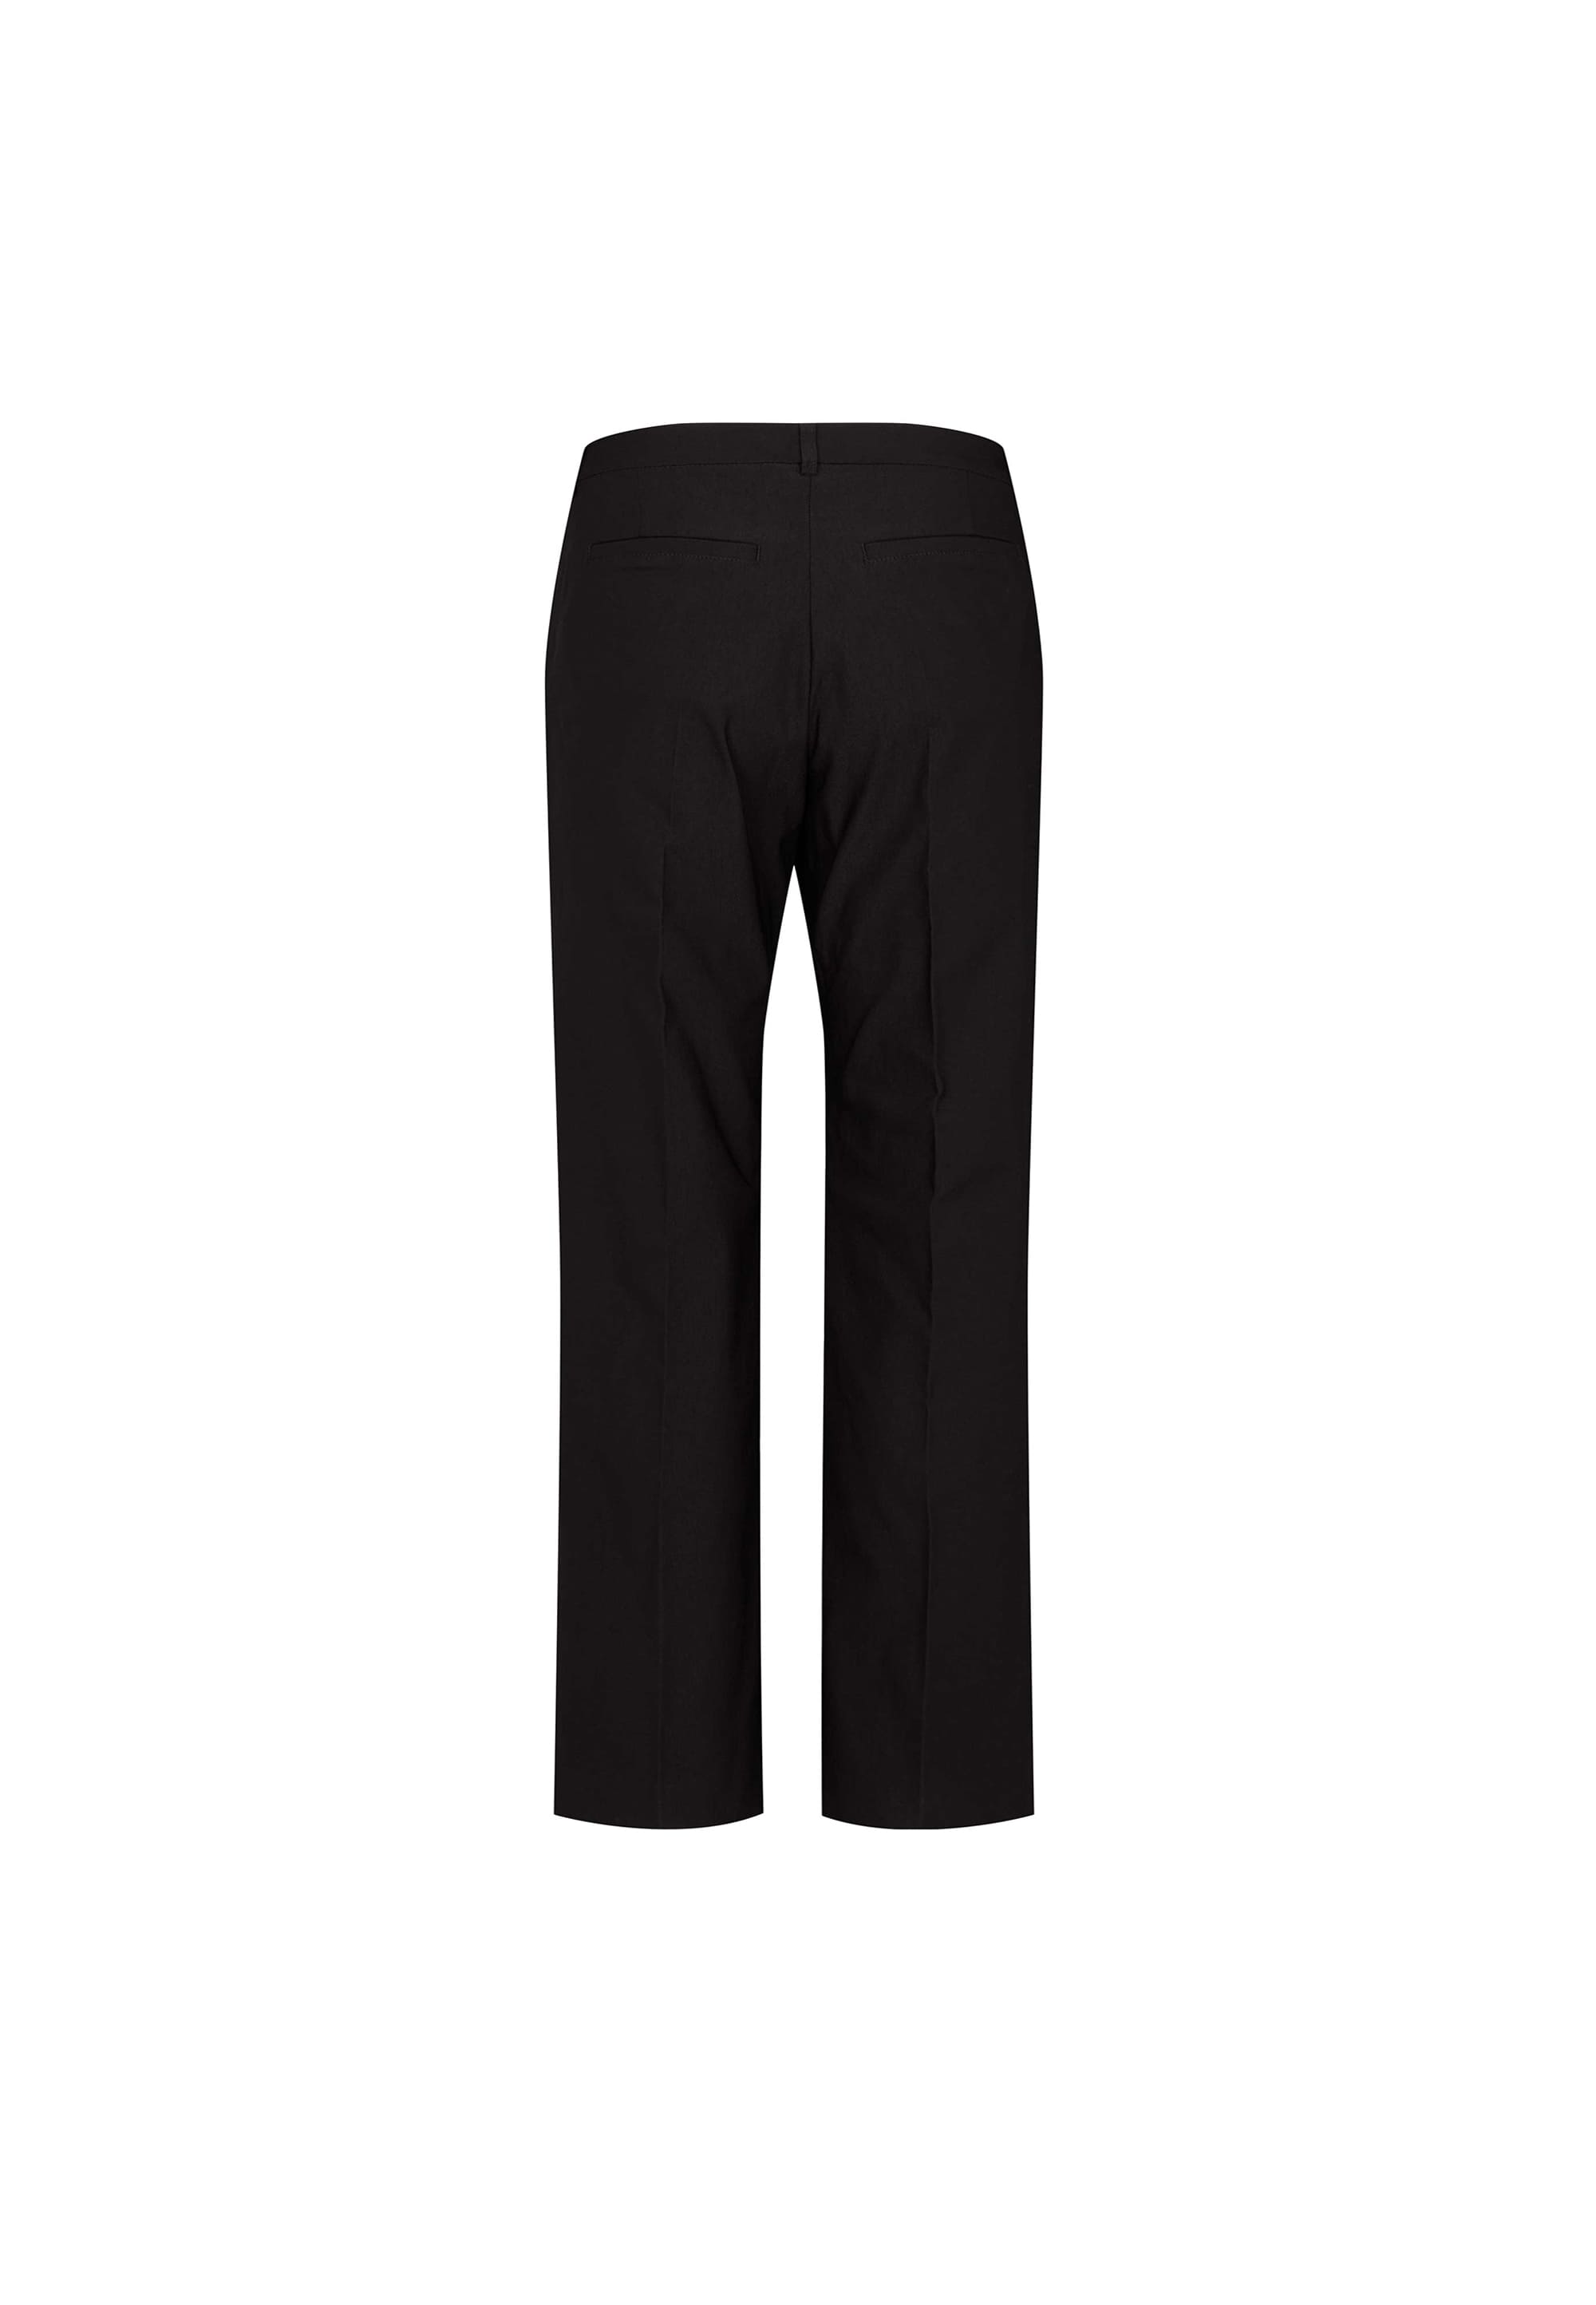 LAURIE Judy Straight - Medium Length Trousers STRAIGHT 99970 Black